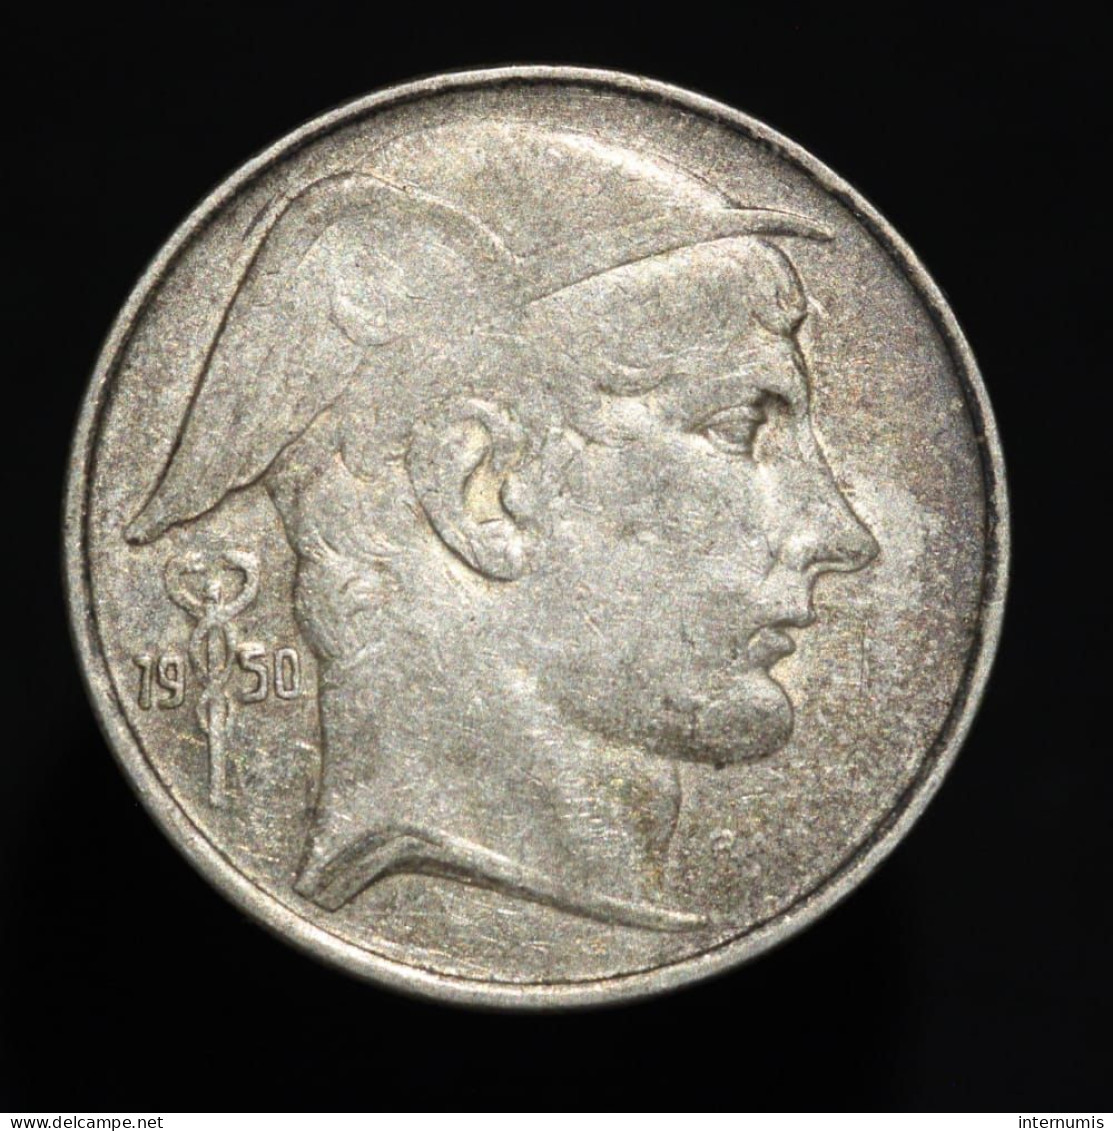 Belgique / Belgium, 20 Francs, 1950, Argent (Silver), TTB+ (EF), KM#140.1 - 20 Francs